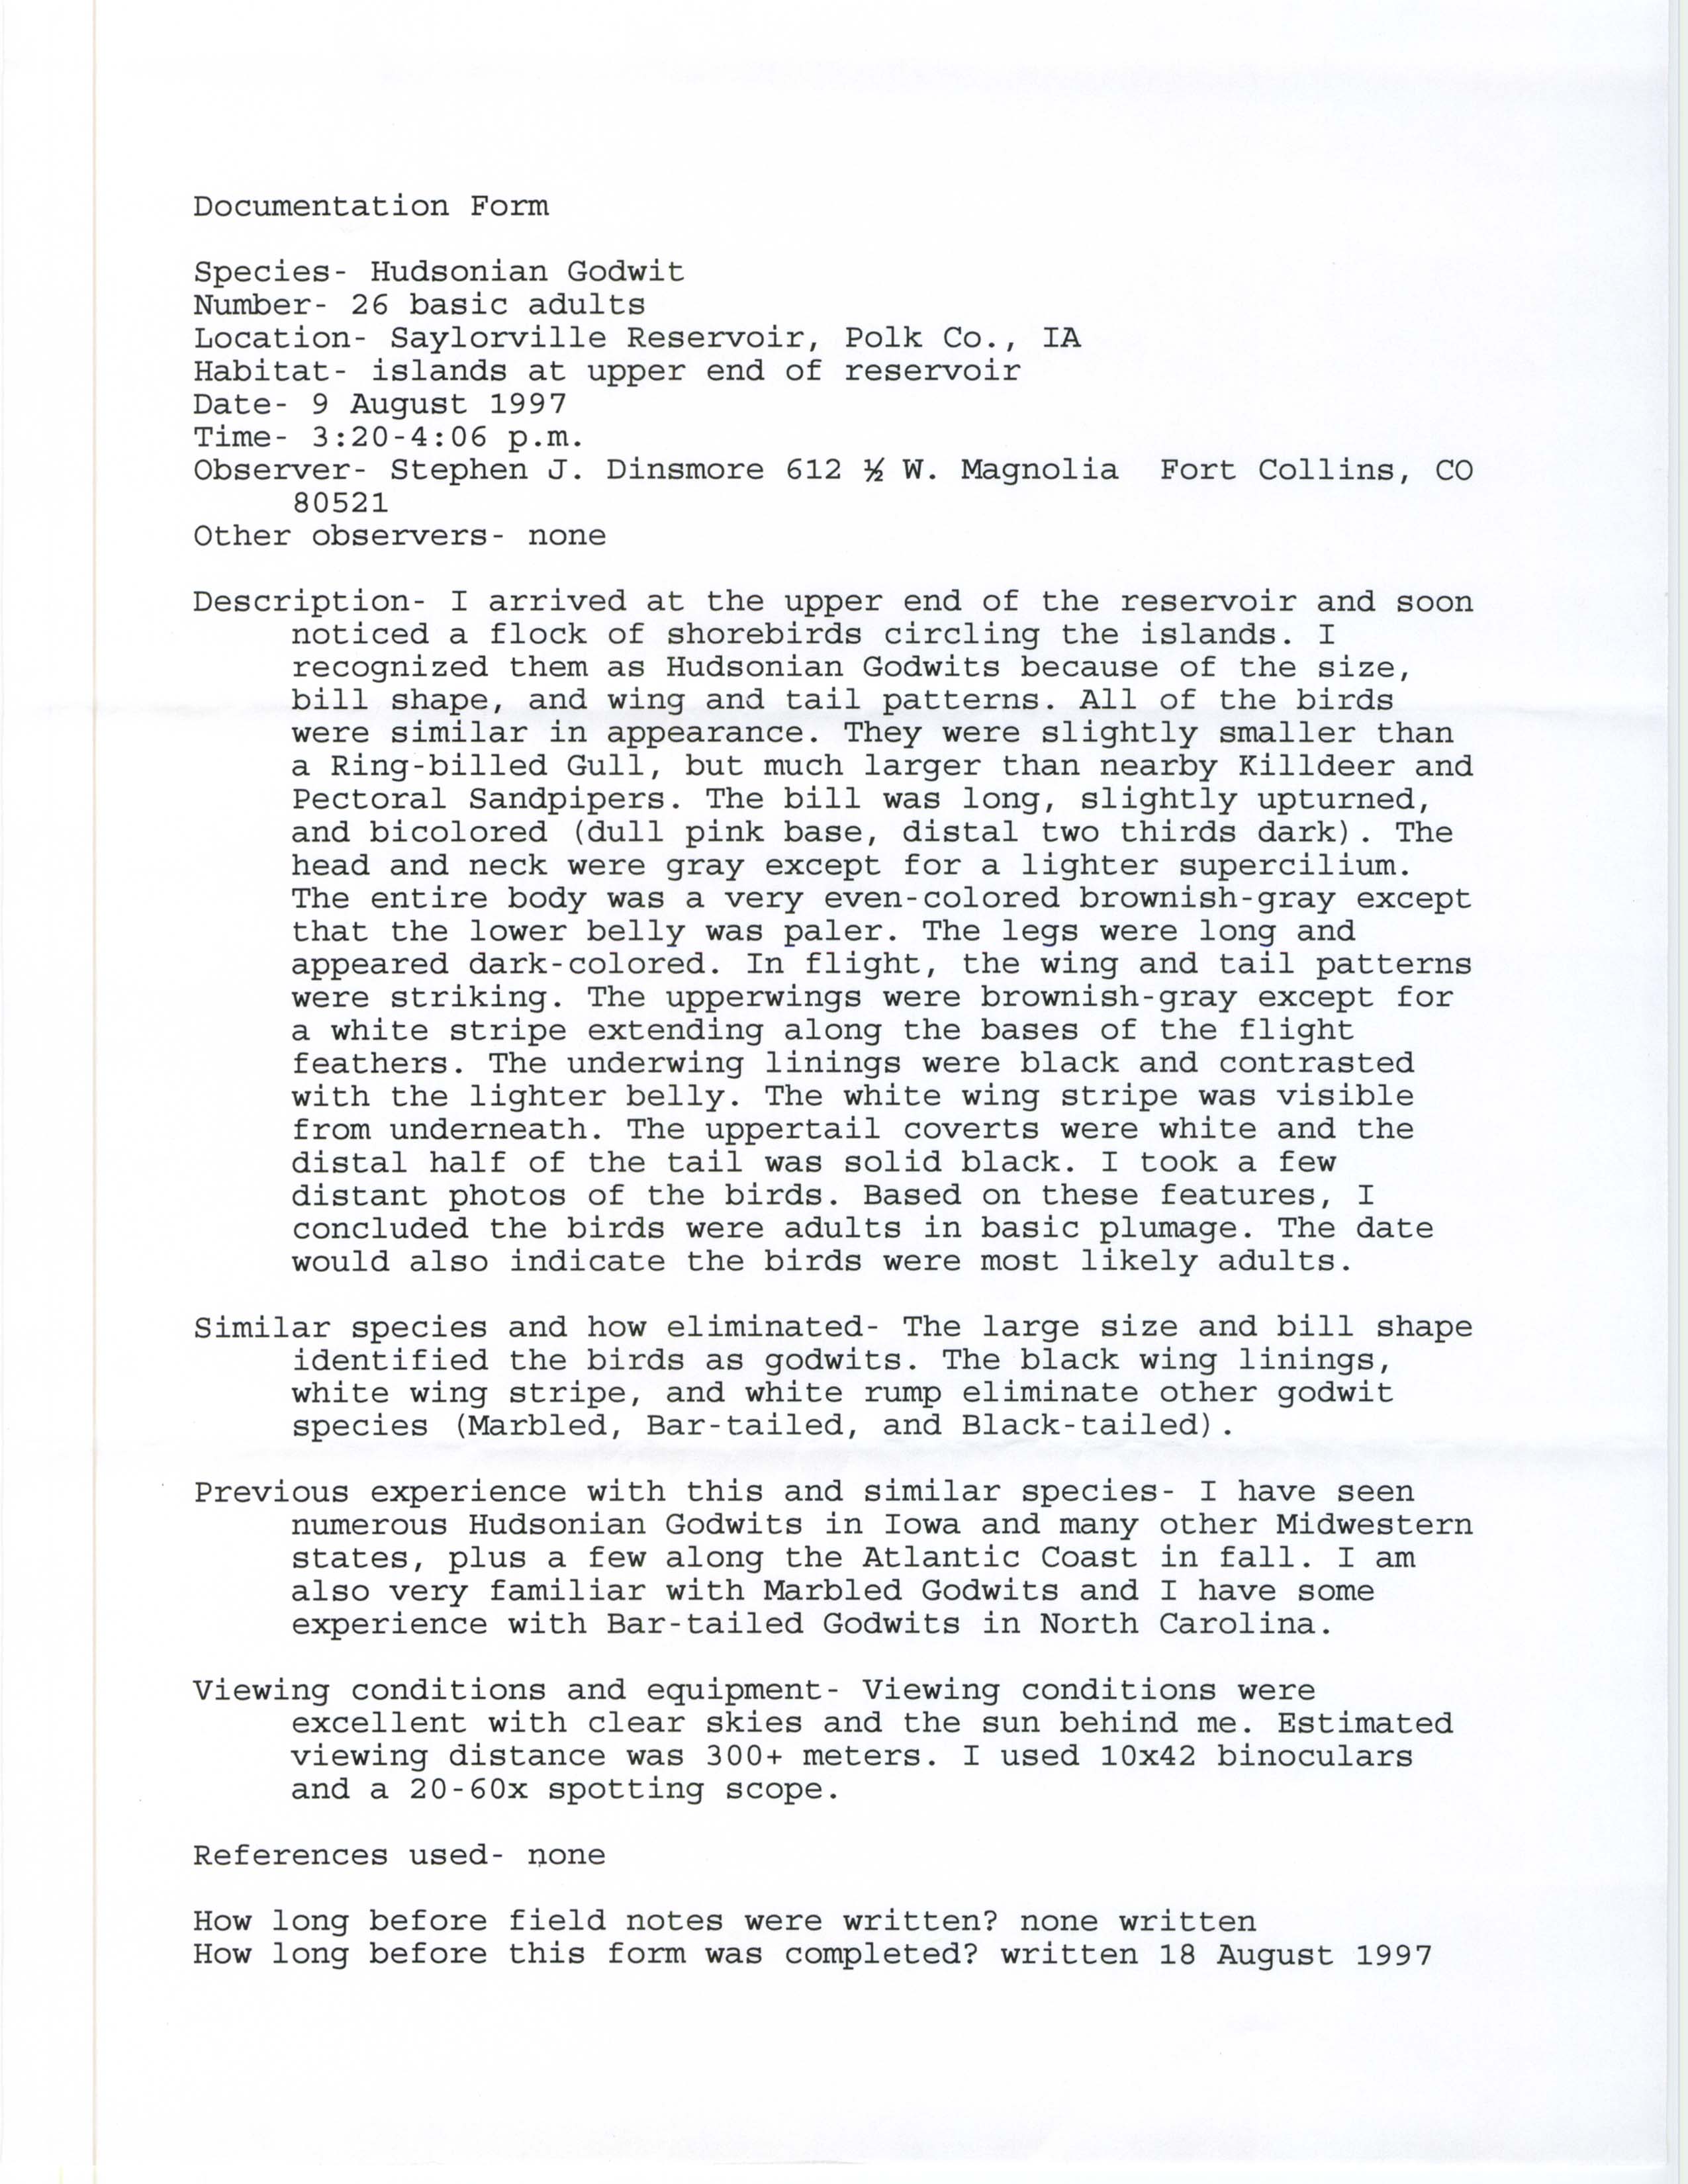 Rare bird documentation form for Hudsonian Godwit at Saylorville Reservoir, 1997